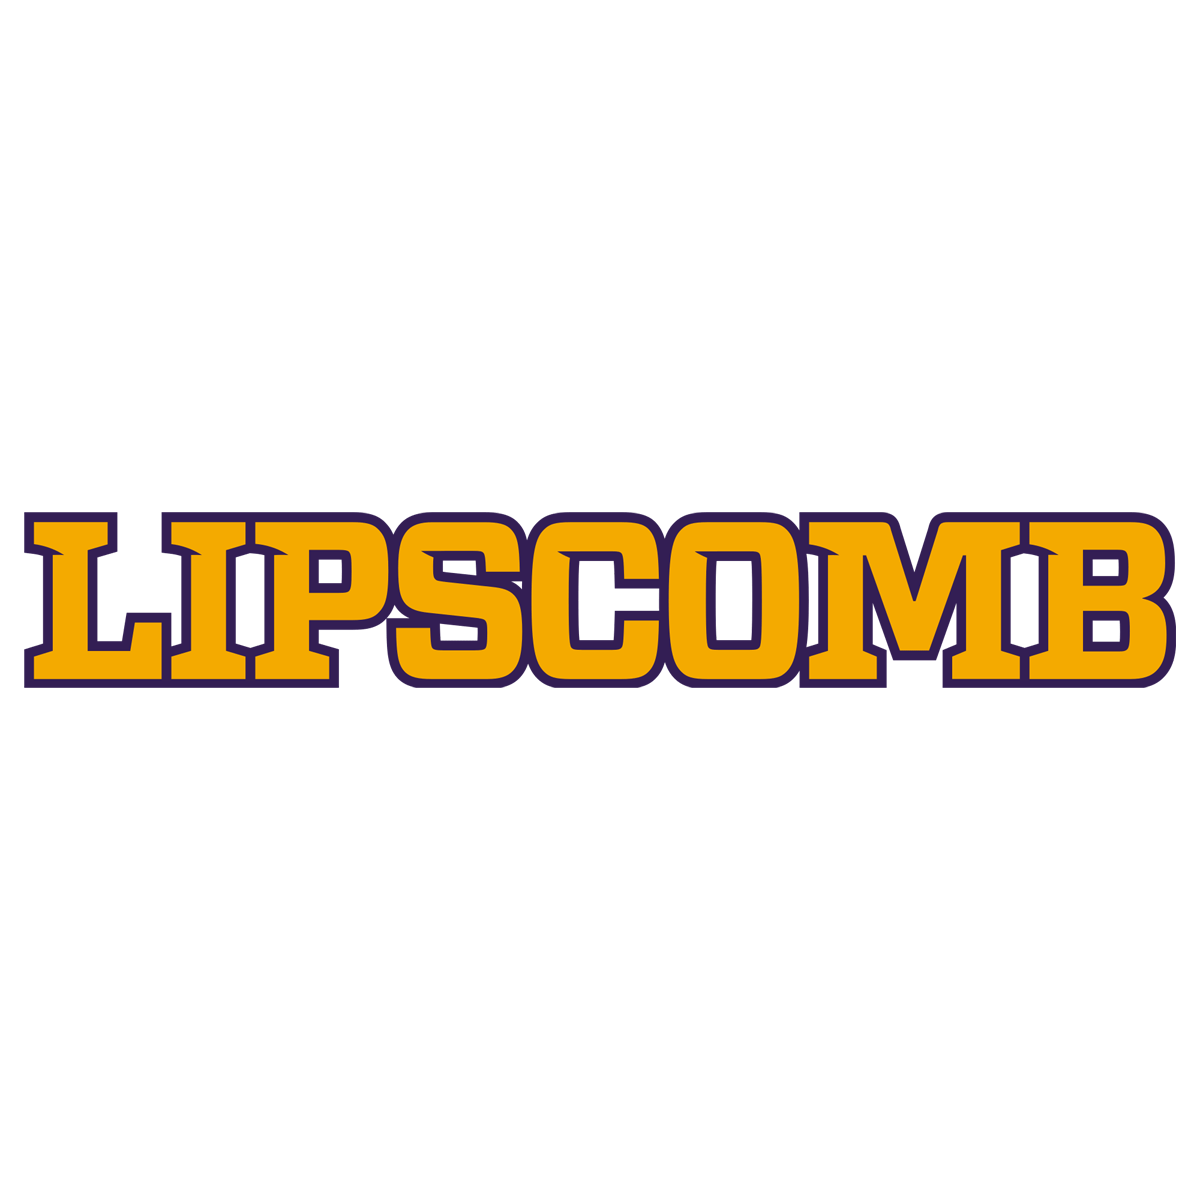 Lipscomb Bisons logo PNG